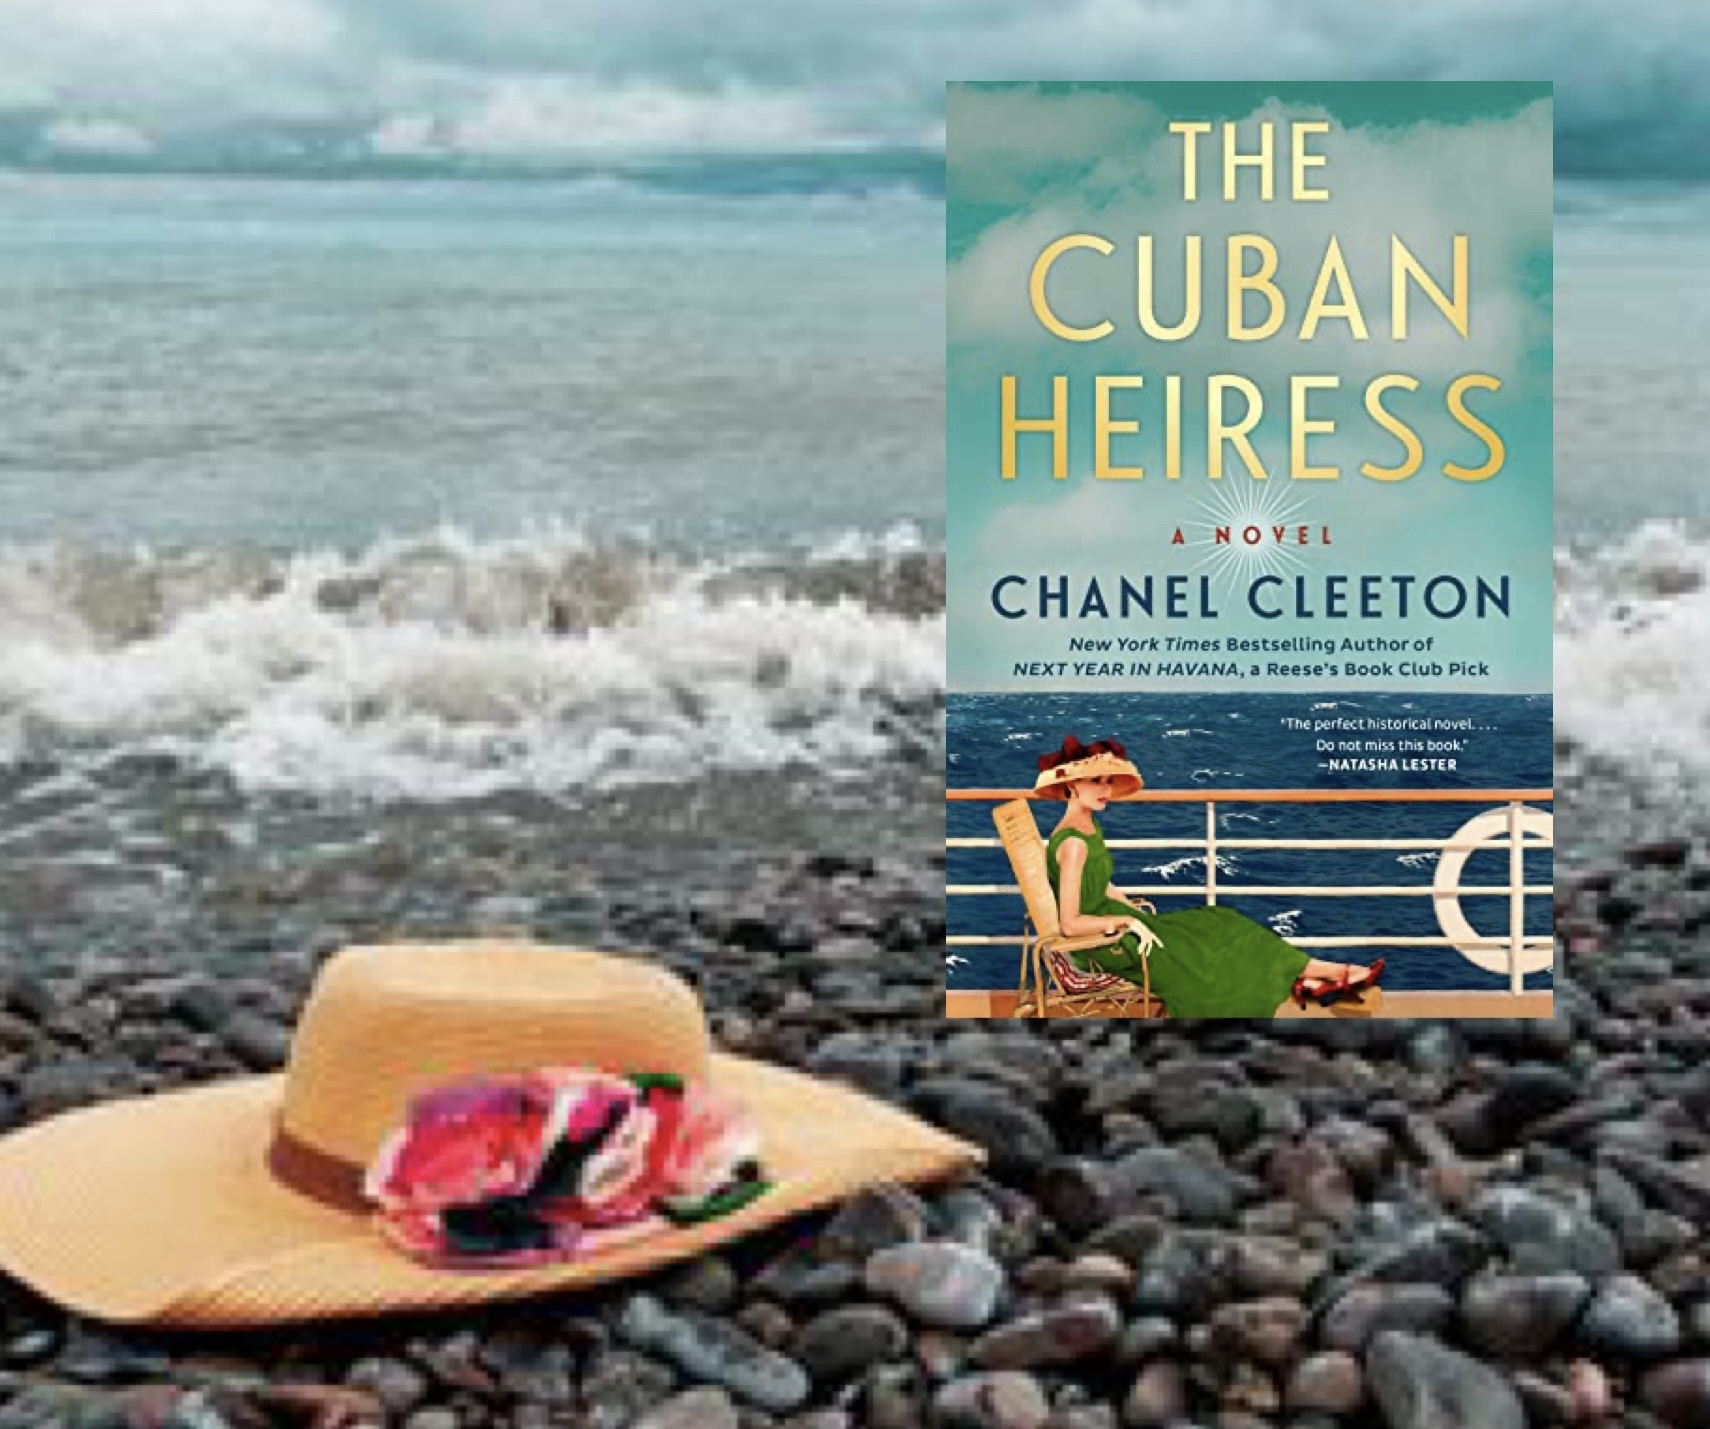 The Cuban Heiress by Chanel Cleeton #booktwitter #bookreview  #historicalfiction @berkleypub